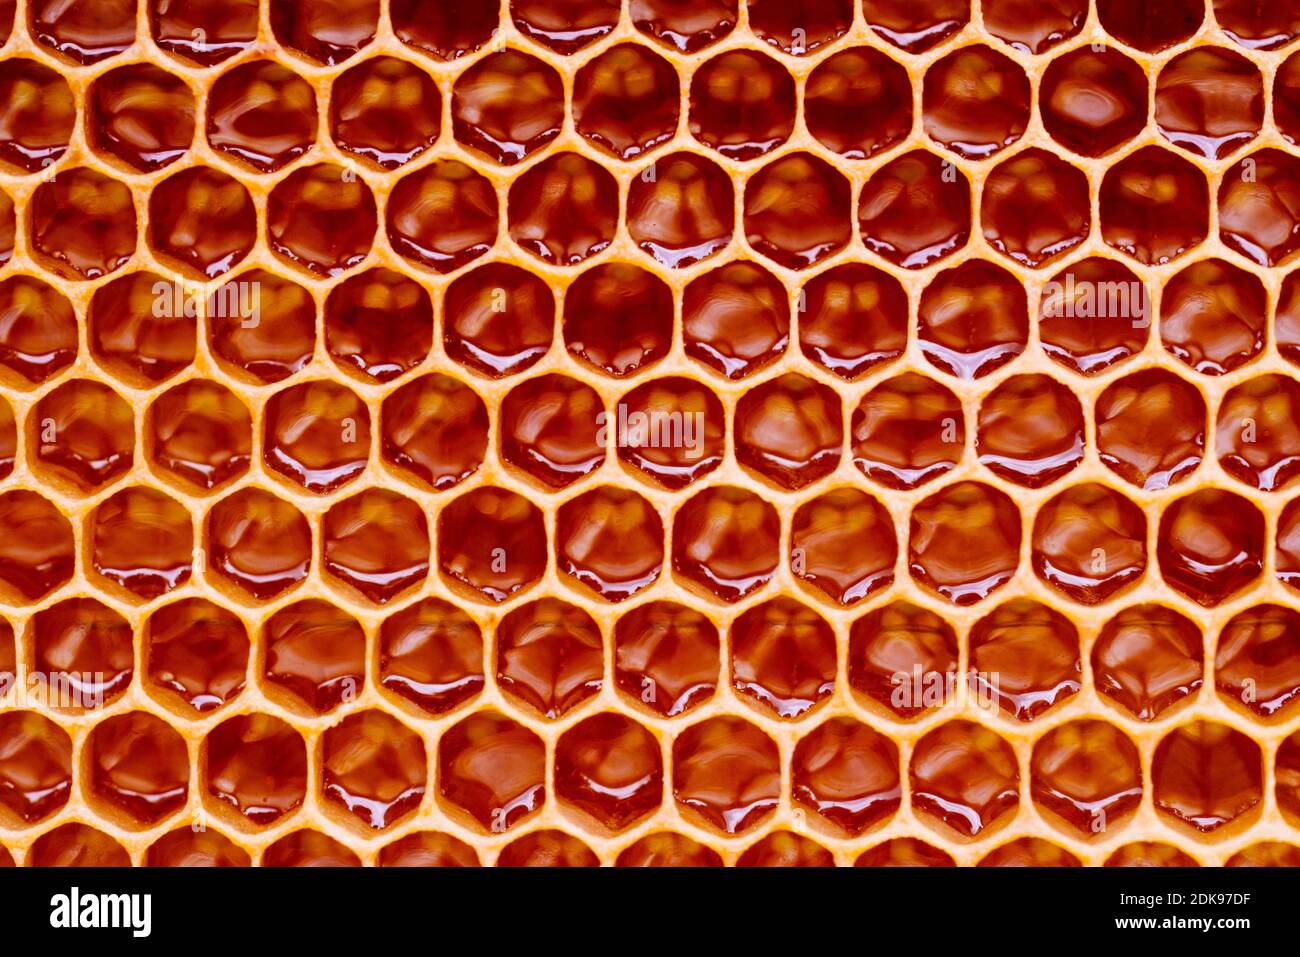 Honey Bee Wax Honeycomb Stock Photo by ©philkinsey 128419508